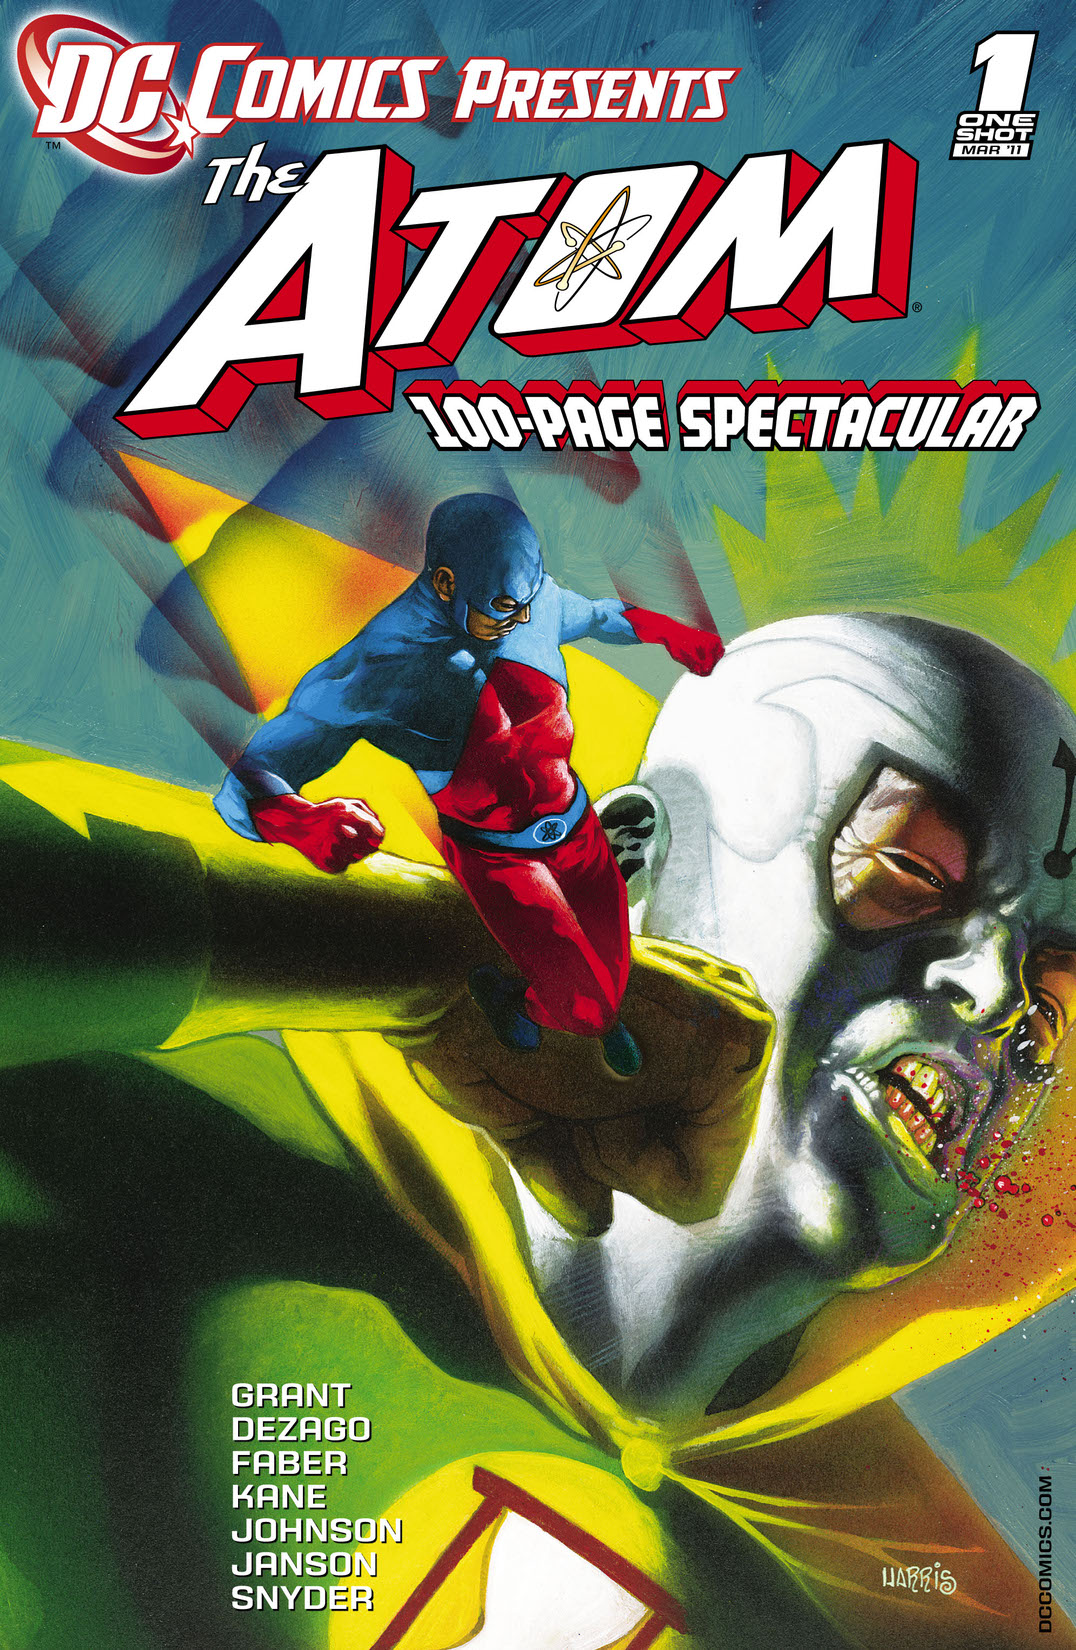 DC Comics Presents: The Atom (2011-) #1 preview images